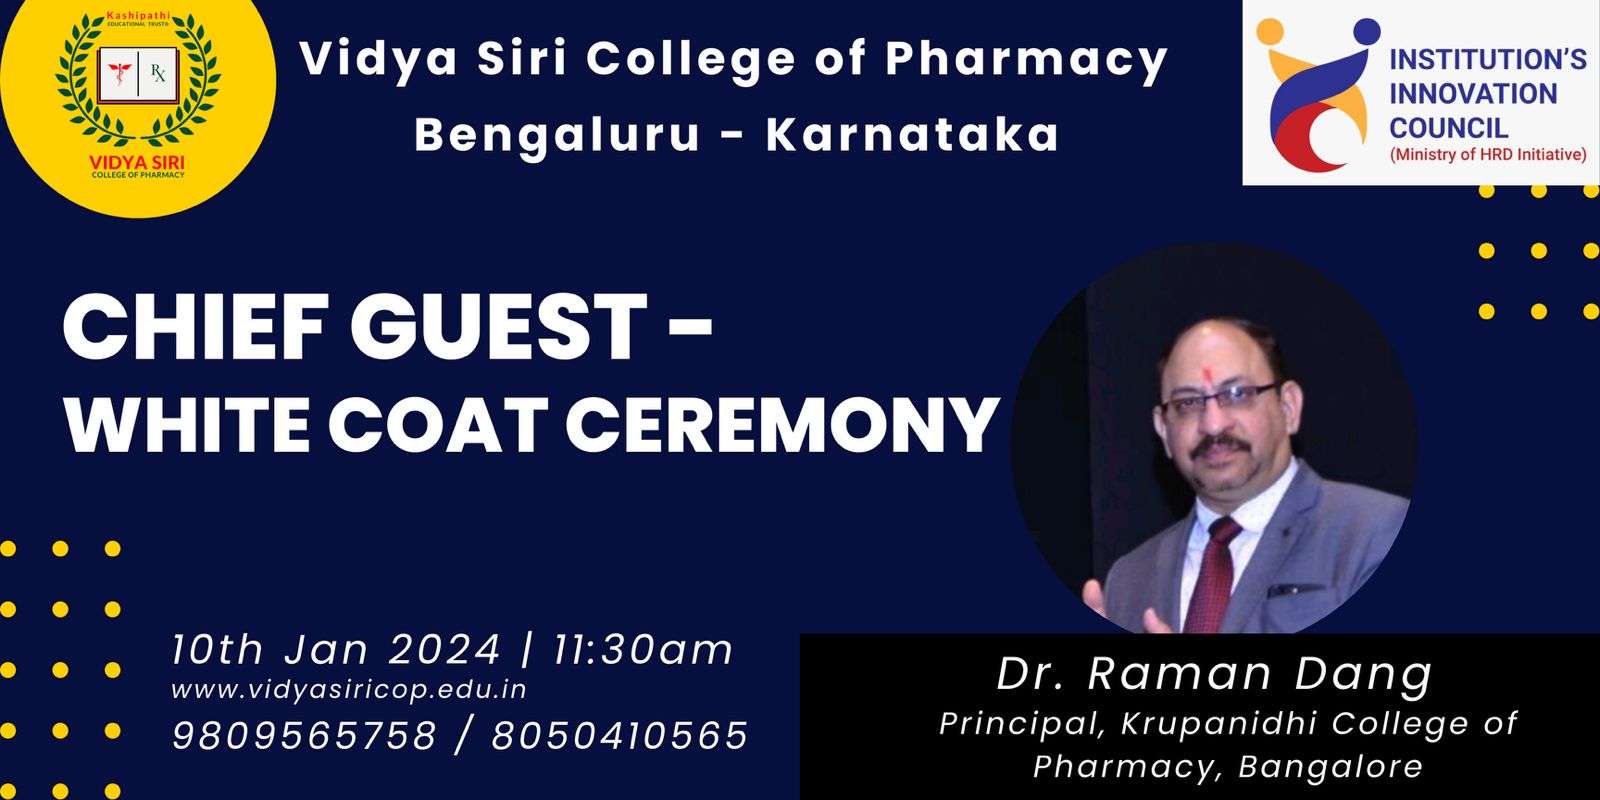 Dr. Raman Dang addressing students at Vidya Siri College of Pharmacy